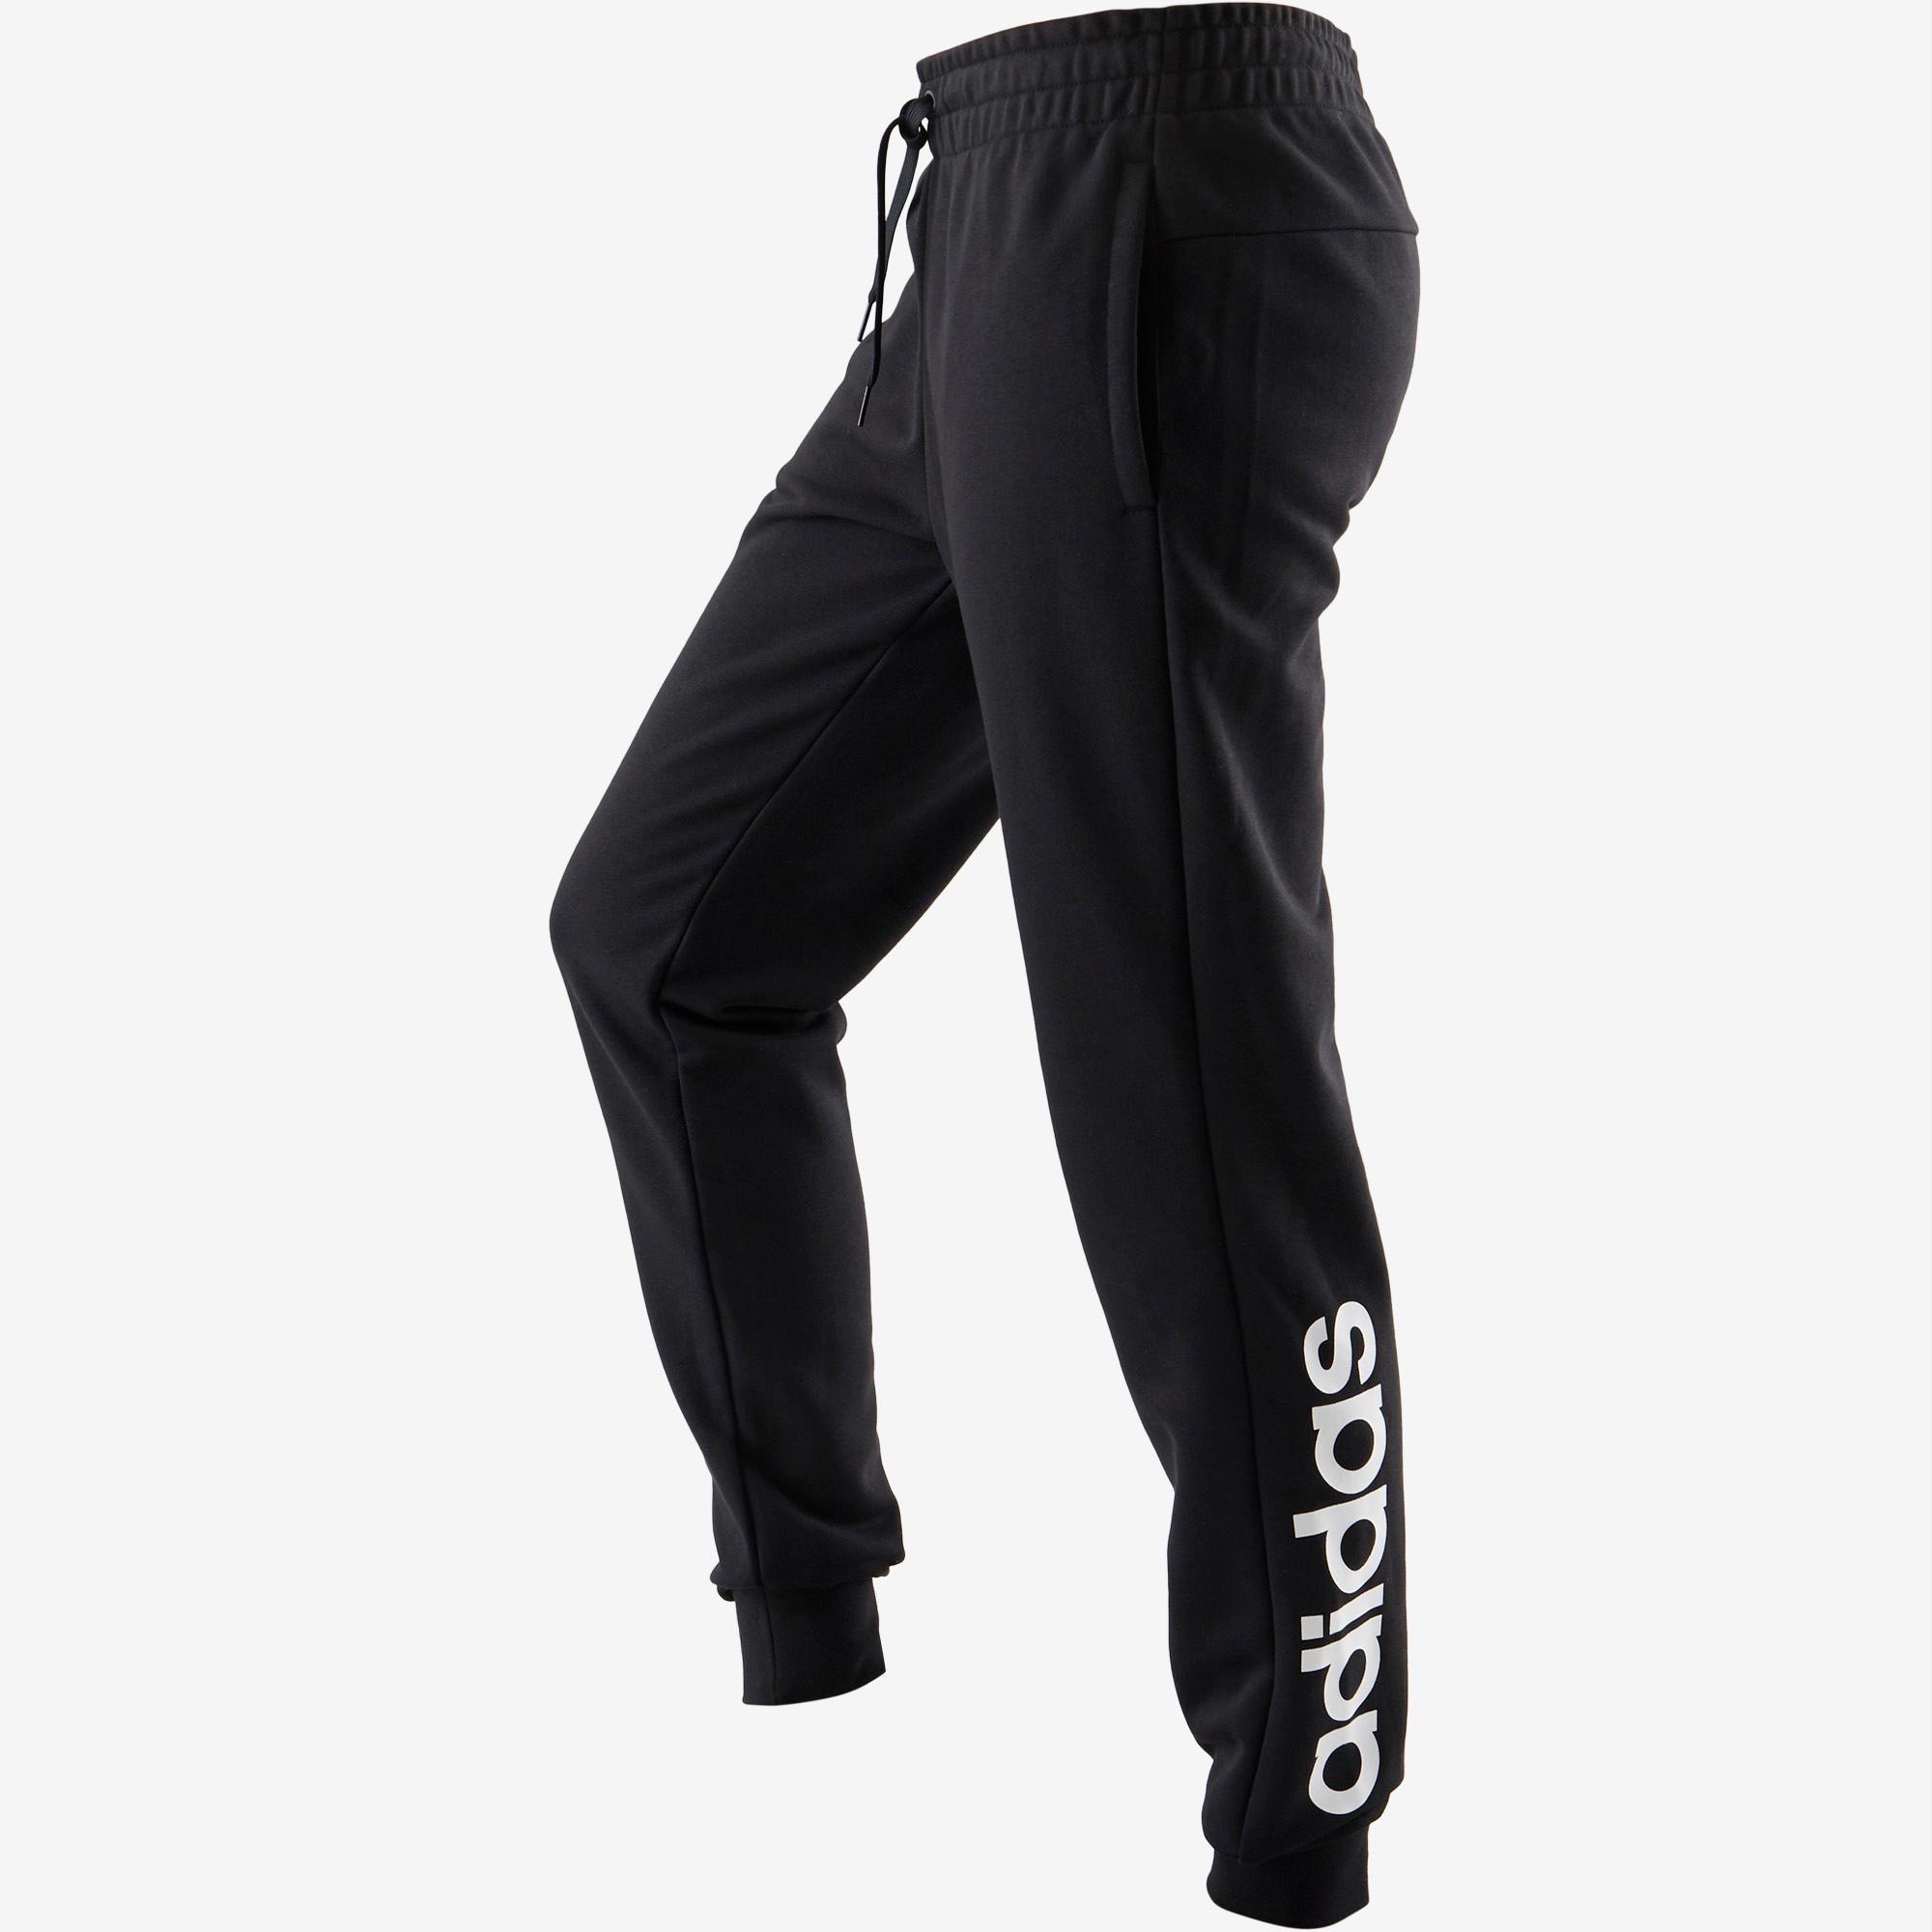 Pantaloni donna gym Linear 500 nero-bianco ADIDAS | DECATHLON